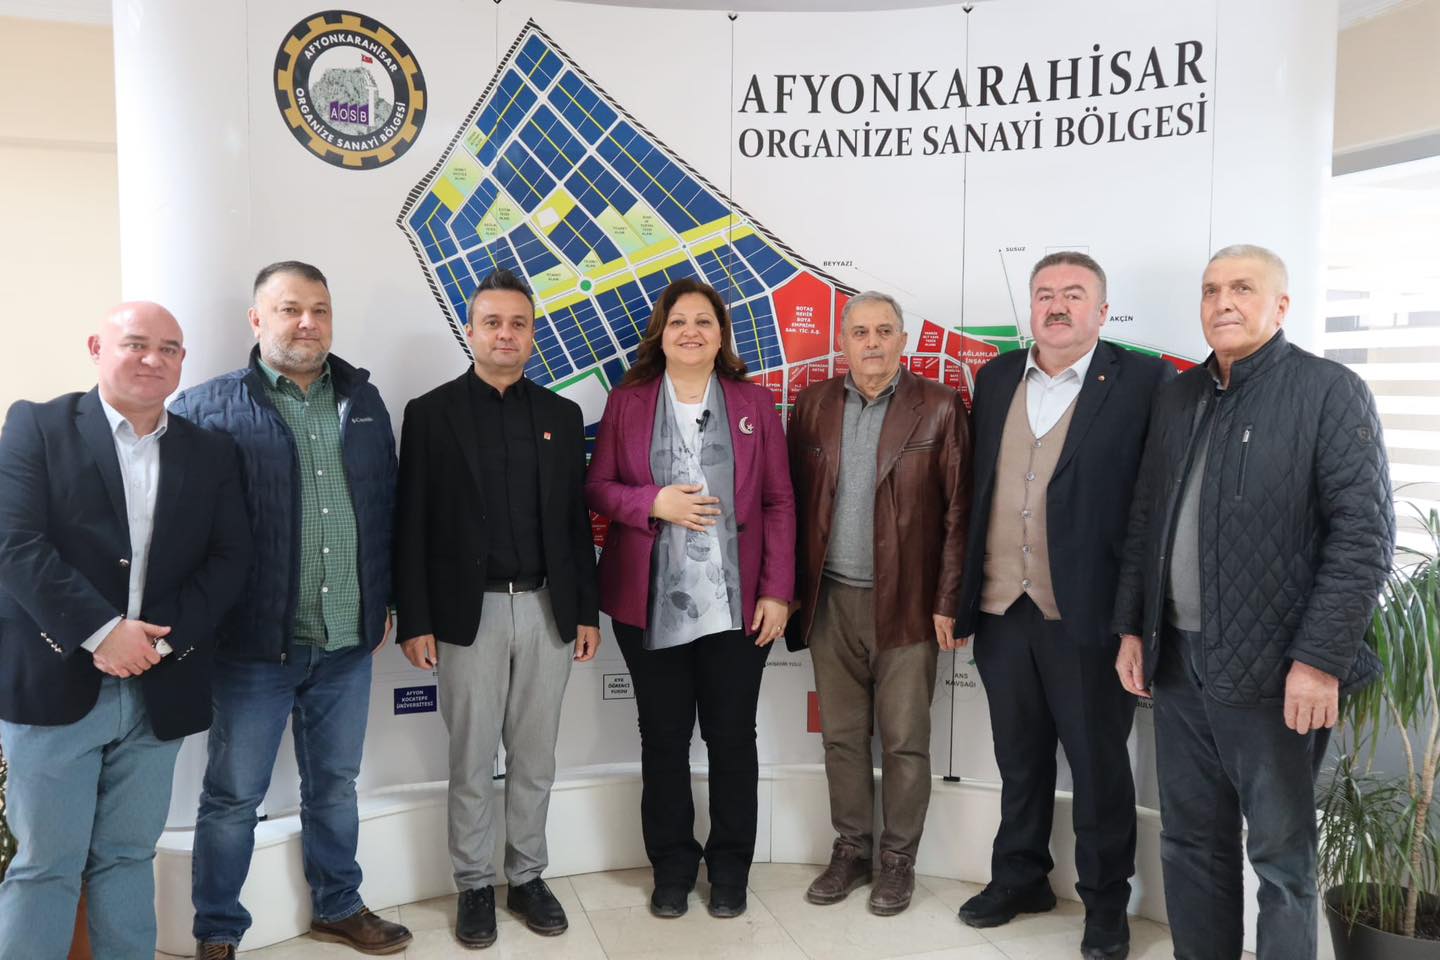 CHP Afyonkarahisar İl Başkanı ve İl Yönetimi, Sanayi Bölgesini Ziyaret Etti